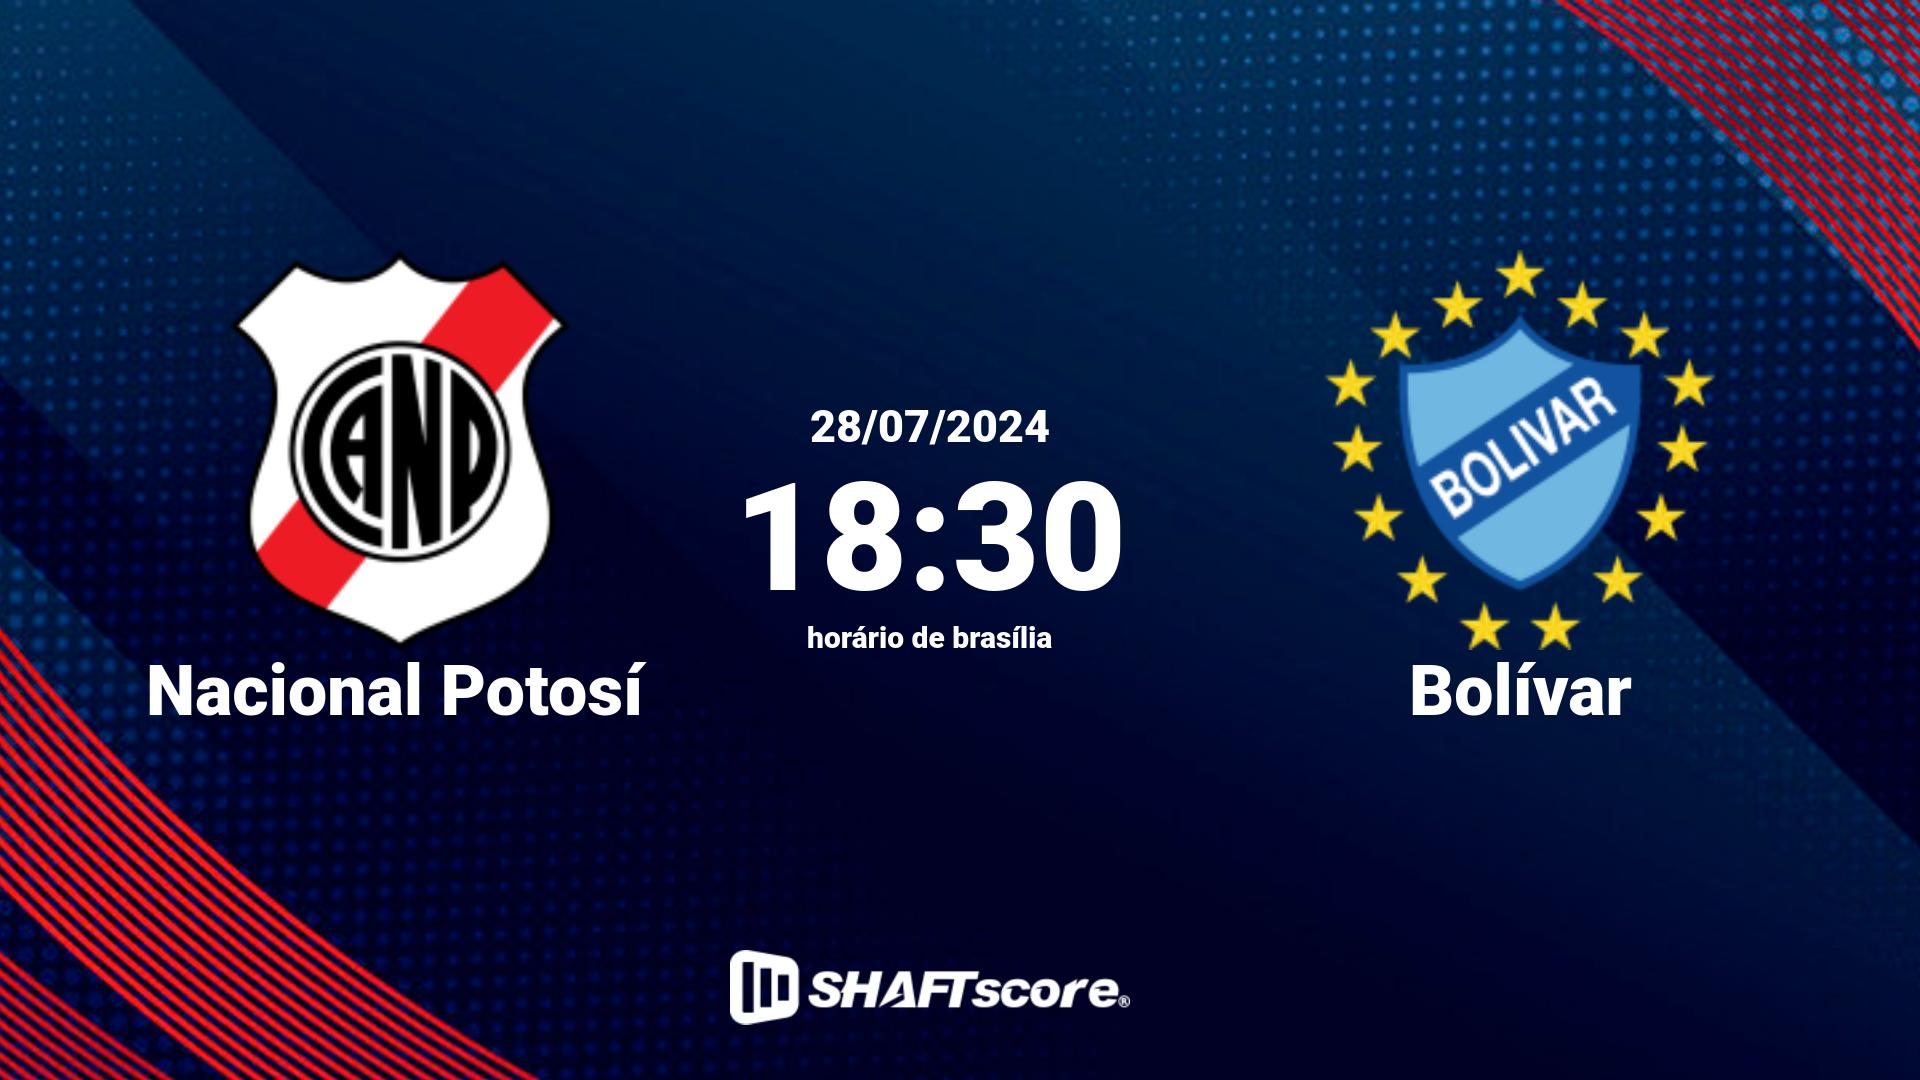 Estatísticas do jogo Nacional Potosí vs Bolívar 28.07 18:30